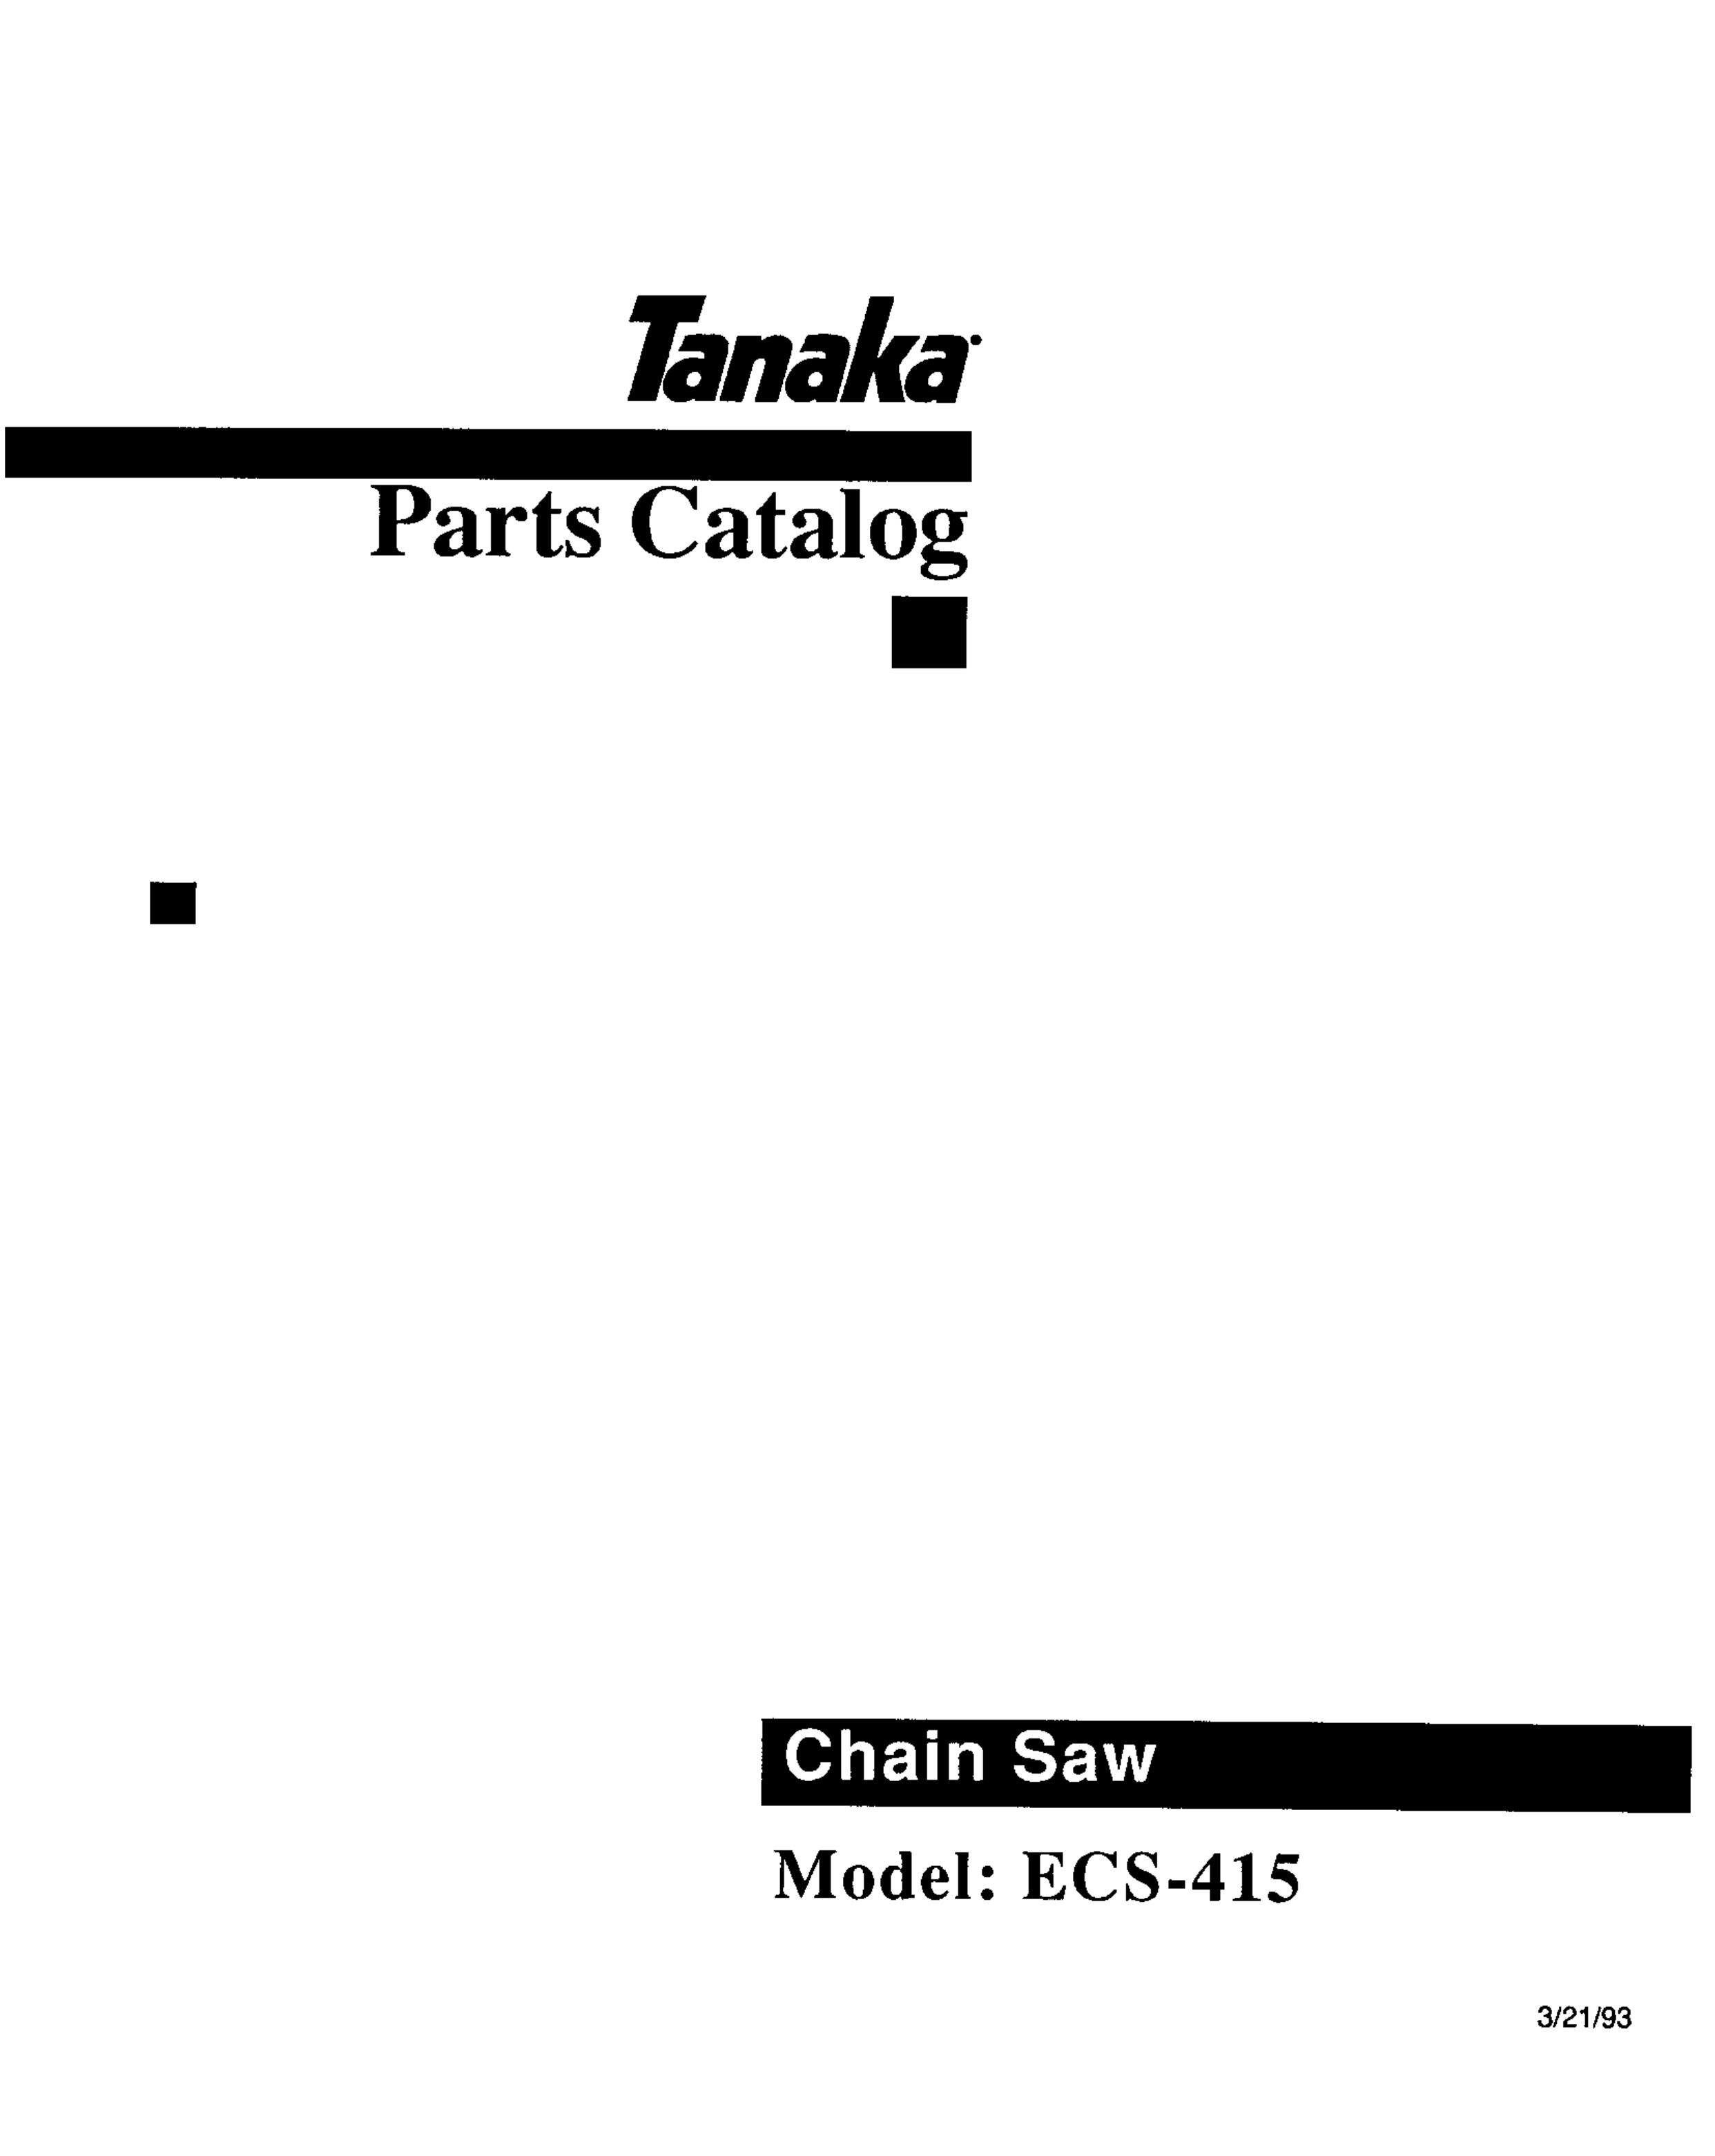 Tanaka ECS-415 Chainsaw User Manual